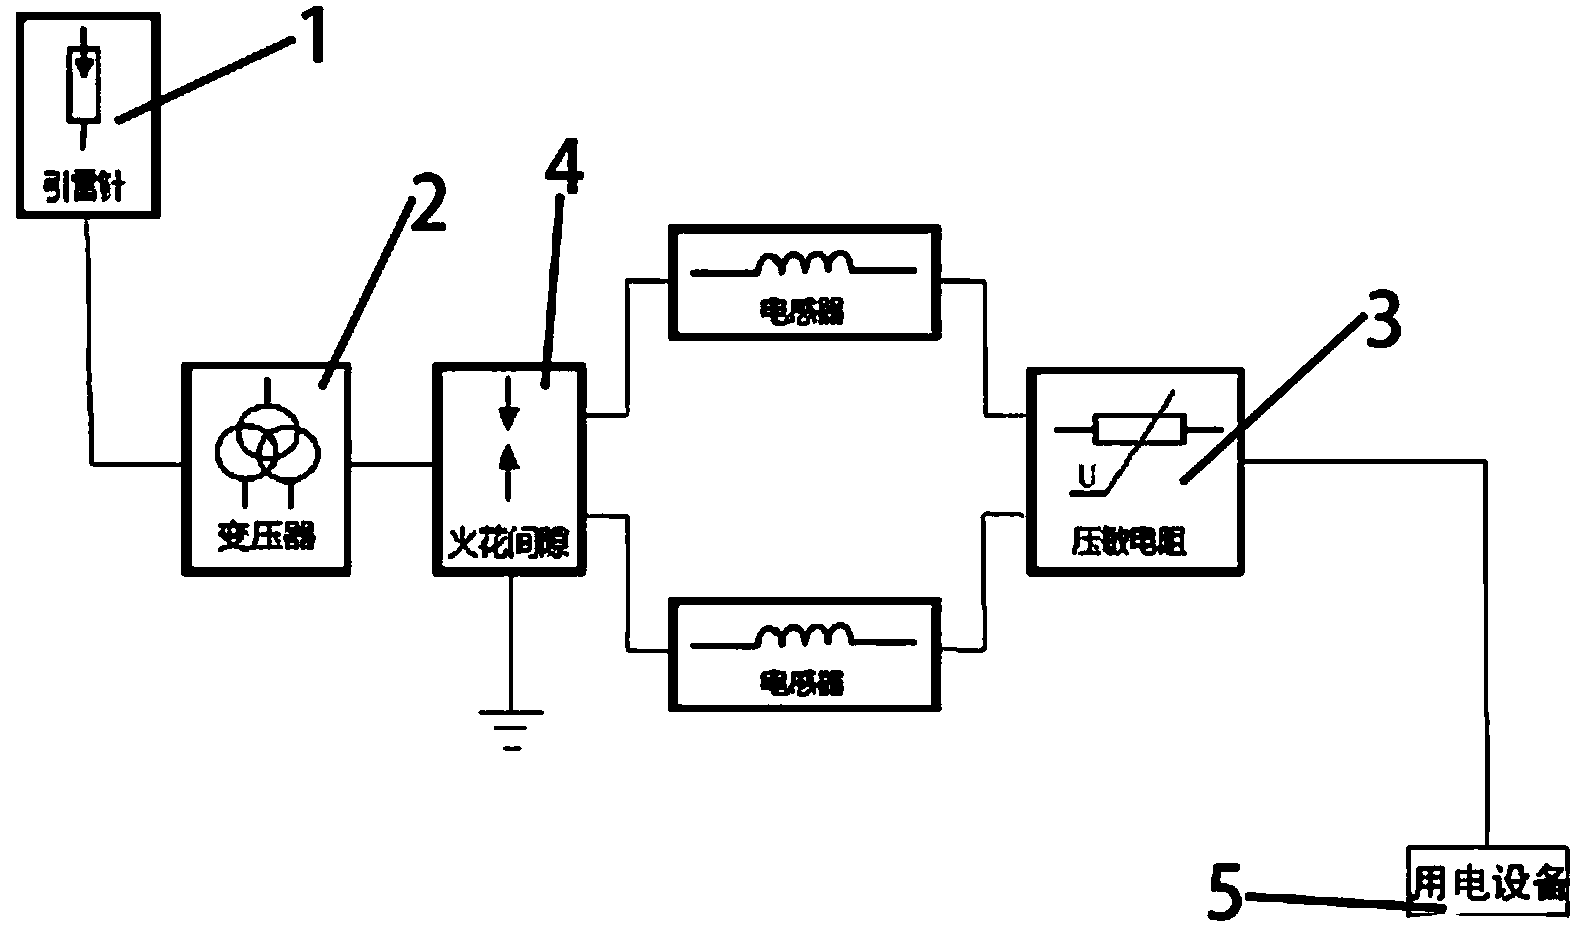 Aerial electricity receiver